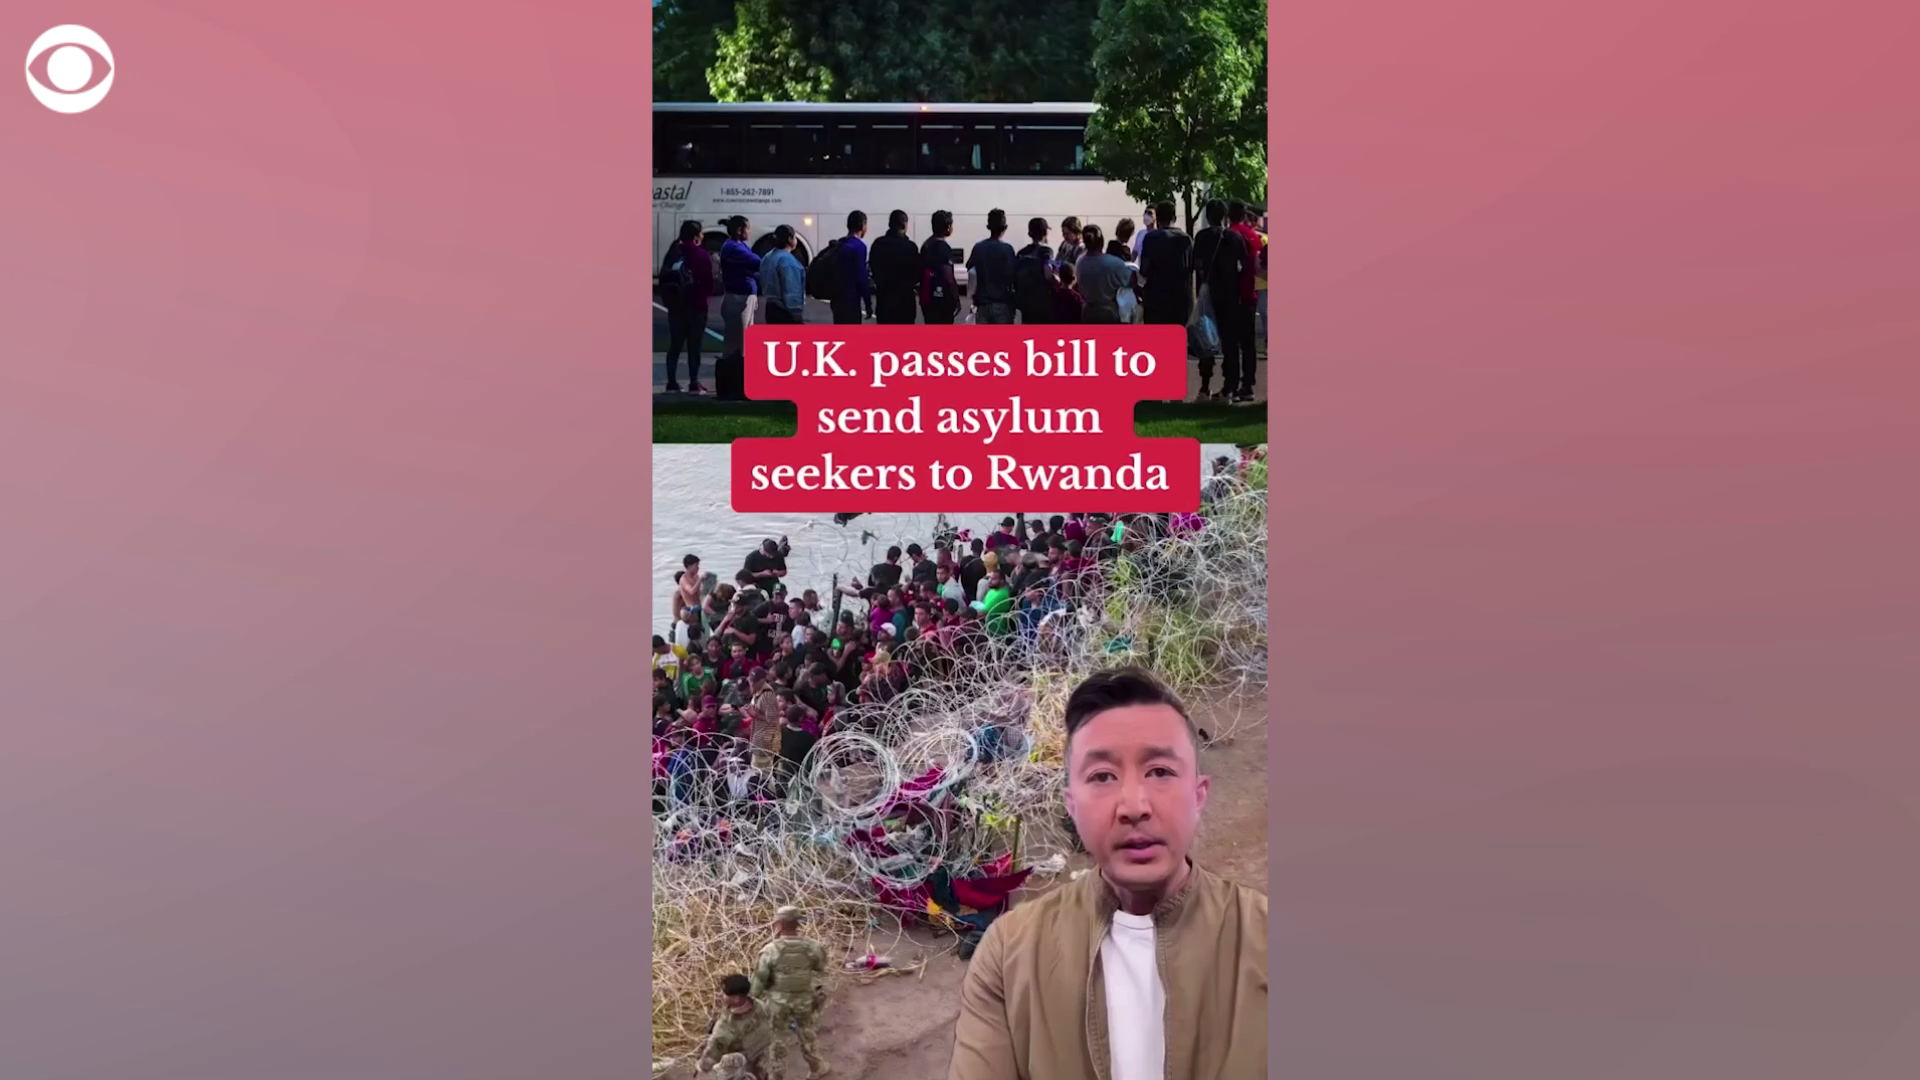 U.K. shares video of first migrants being detained under Rwanda plan